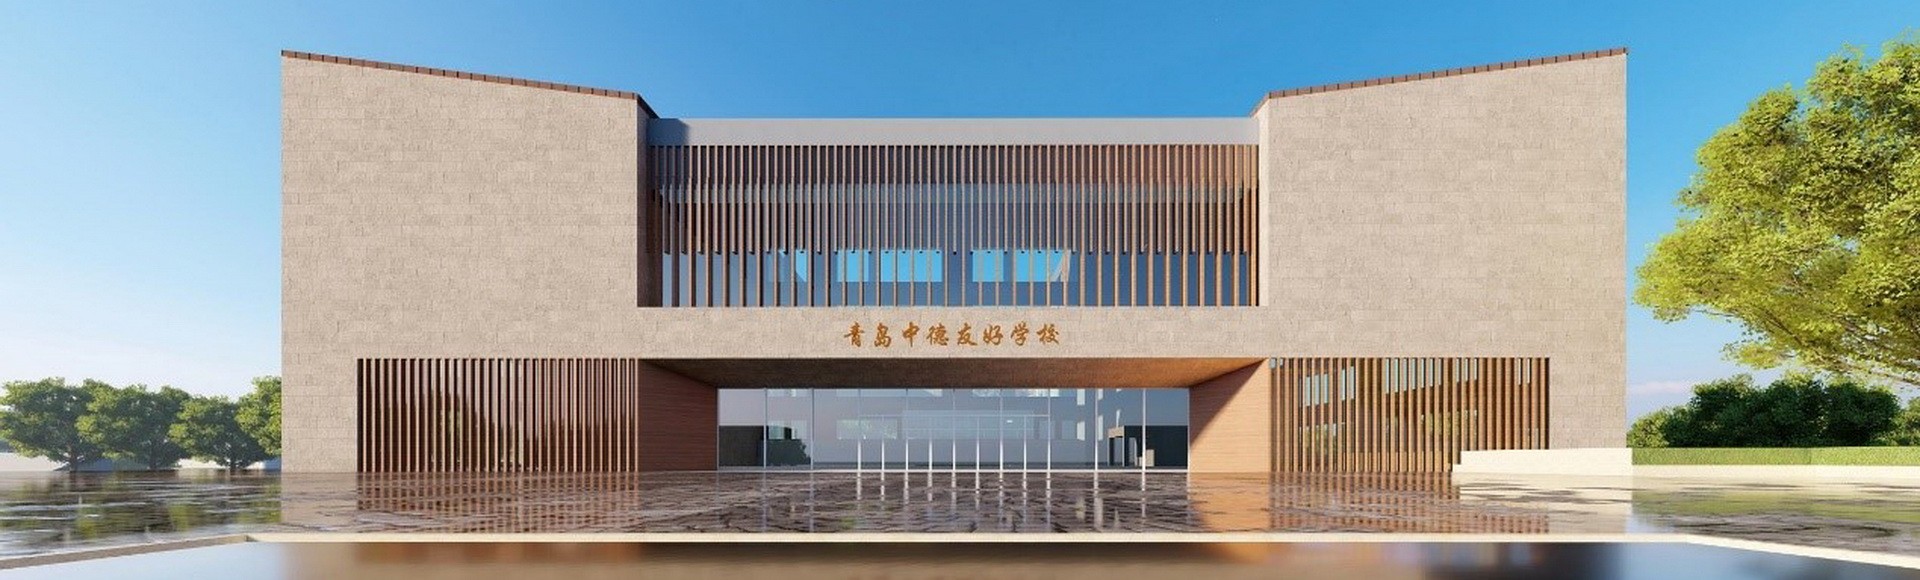 Passivhausprojekt der Deutsch-Chinesischen Freundschaftsschule Qingdao Tongda